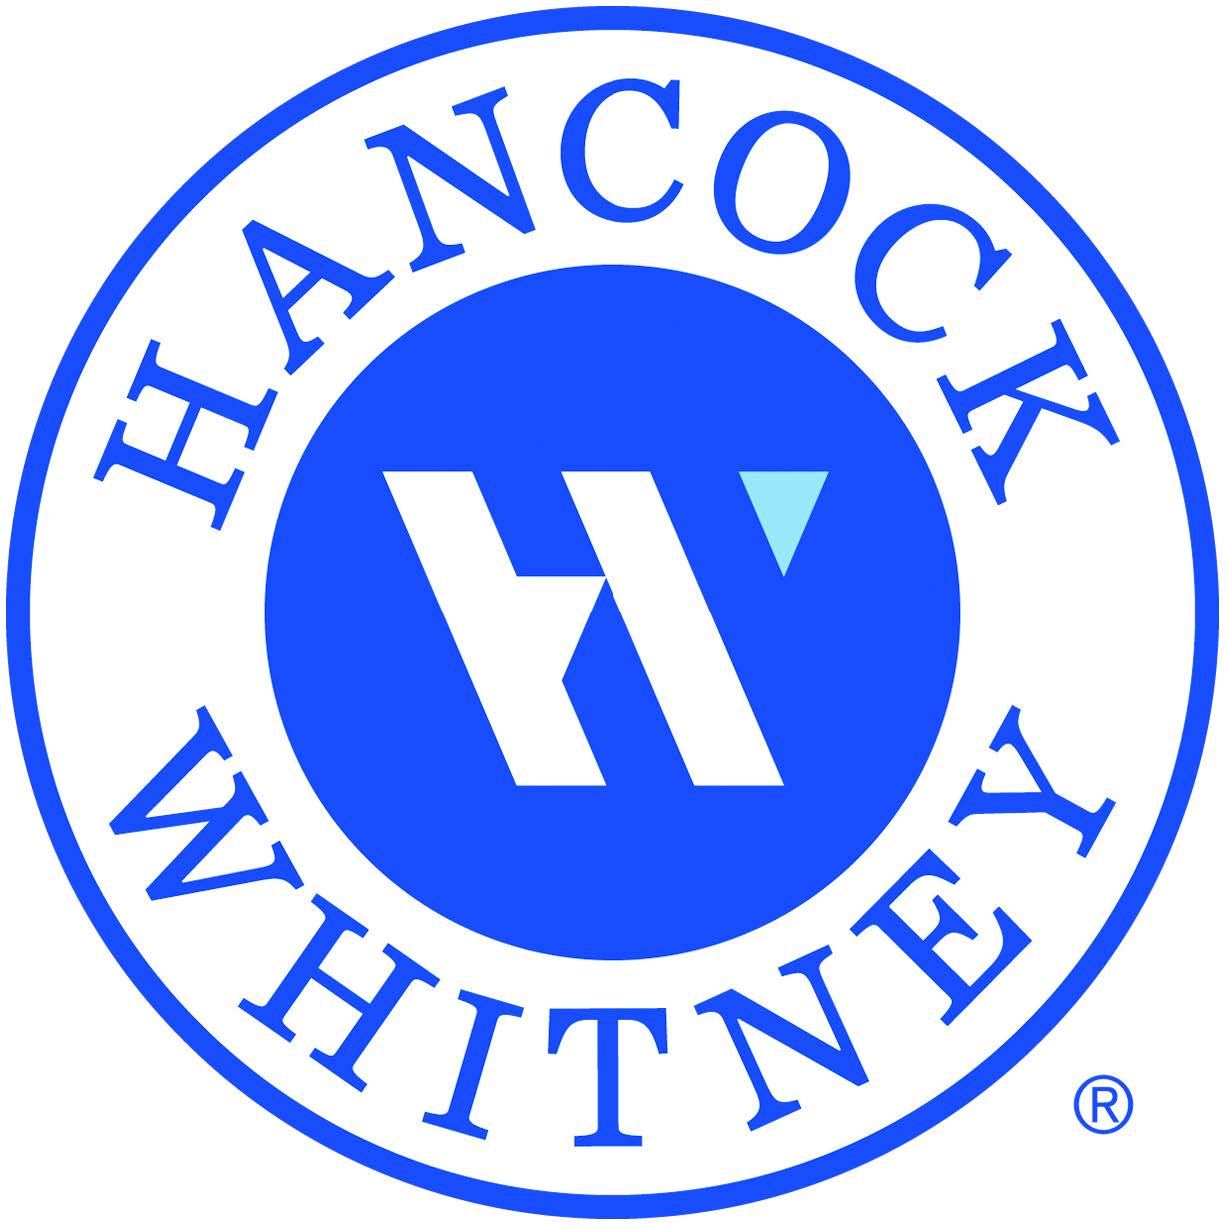 Hancock Whitney standarizes on GMS security platform